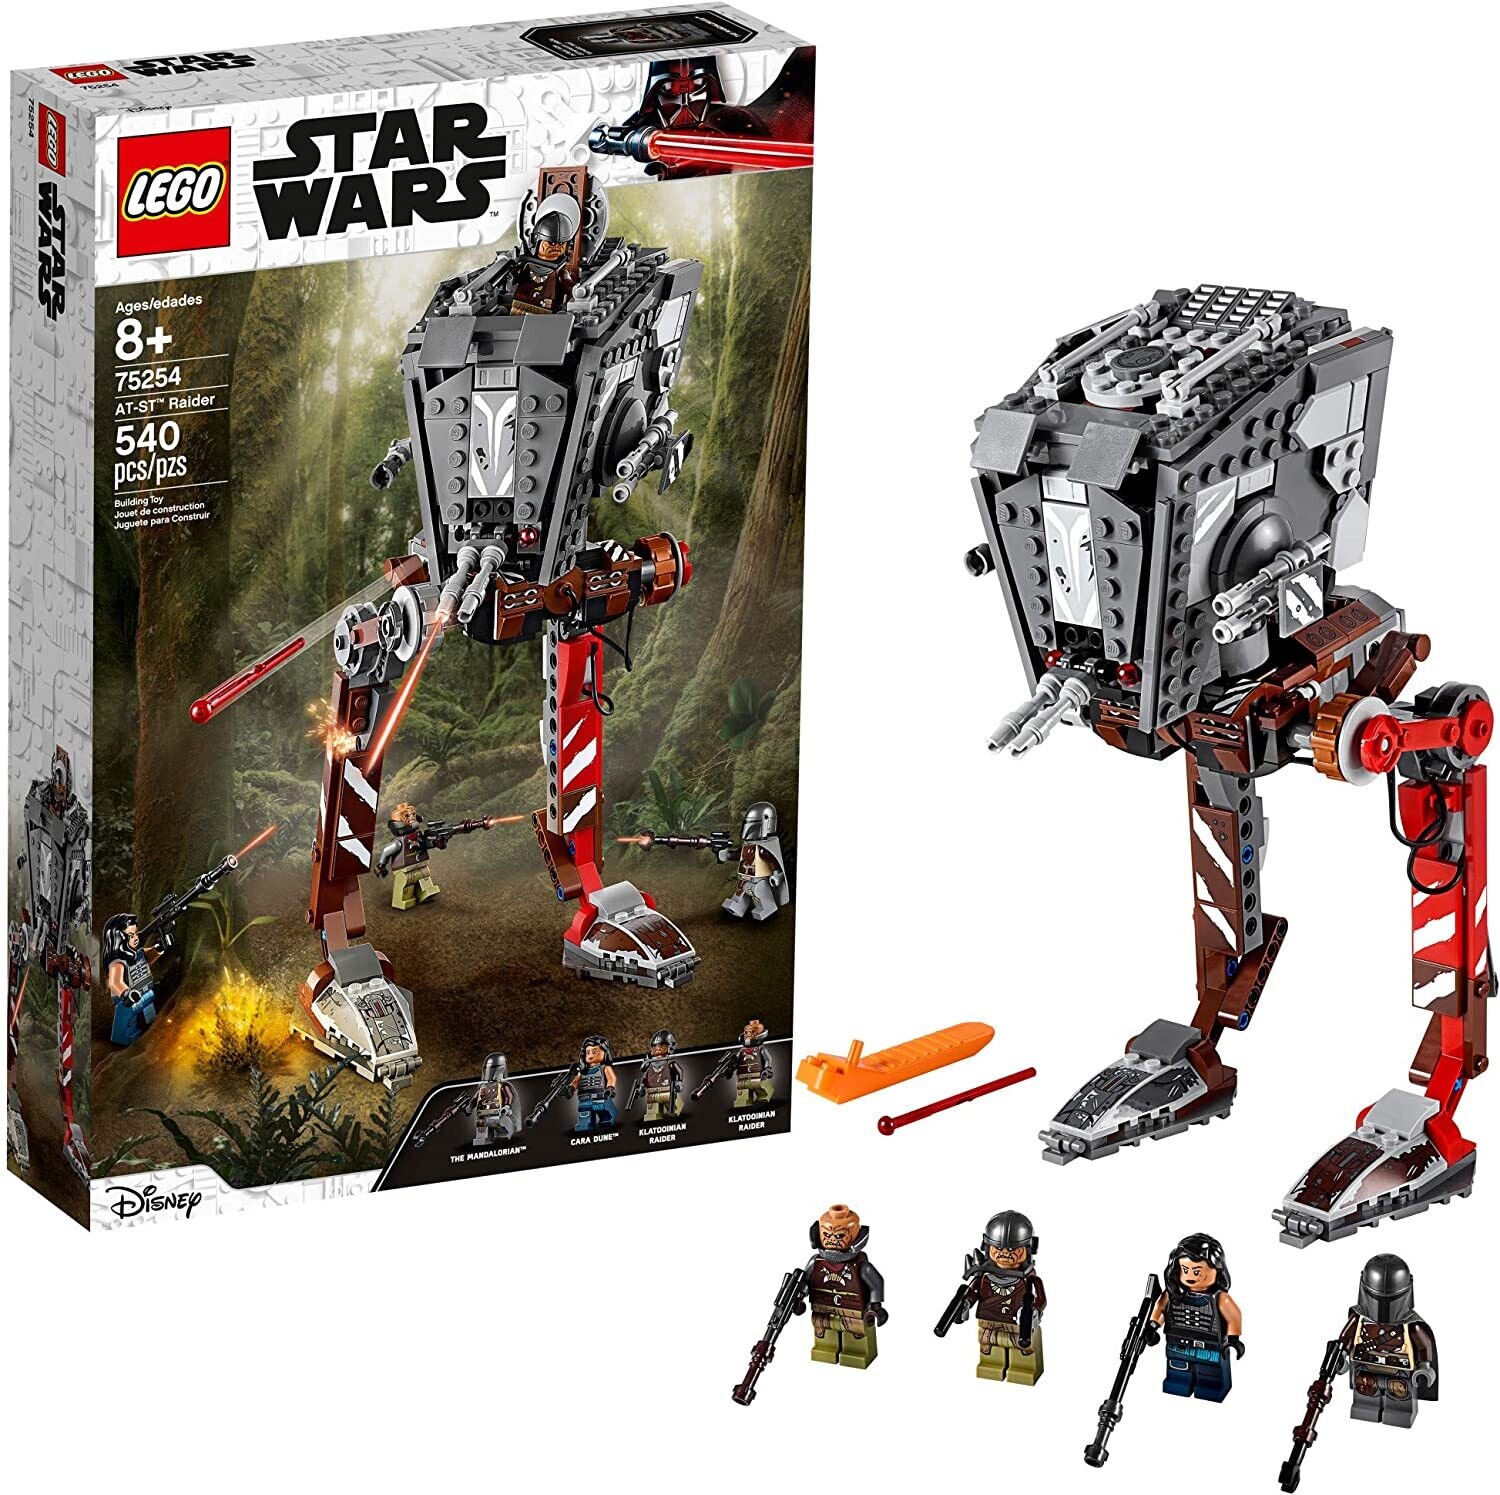 Lego 75254 Star Wars AT-St Raider